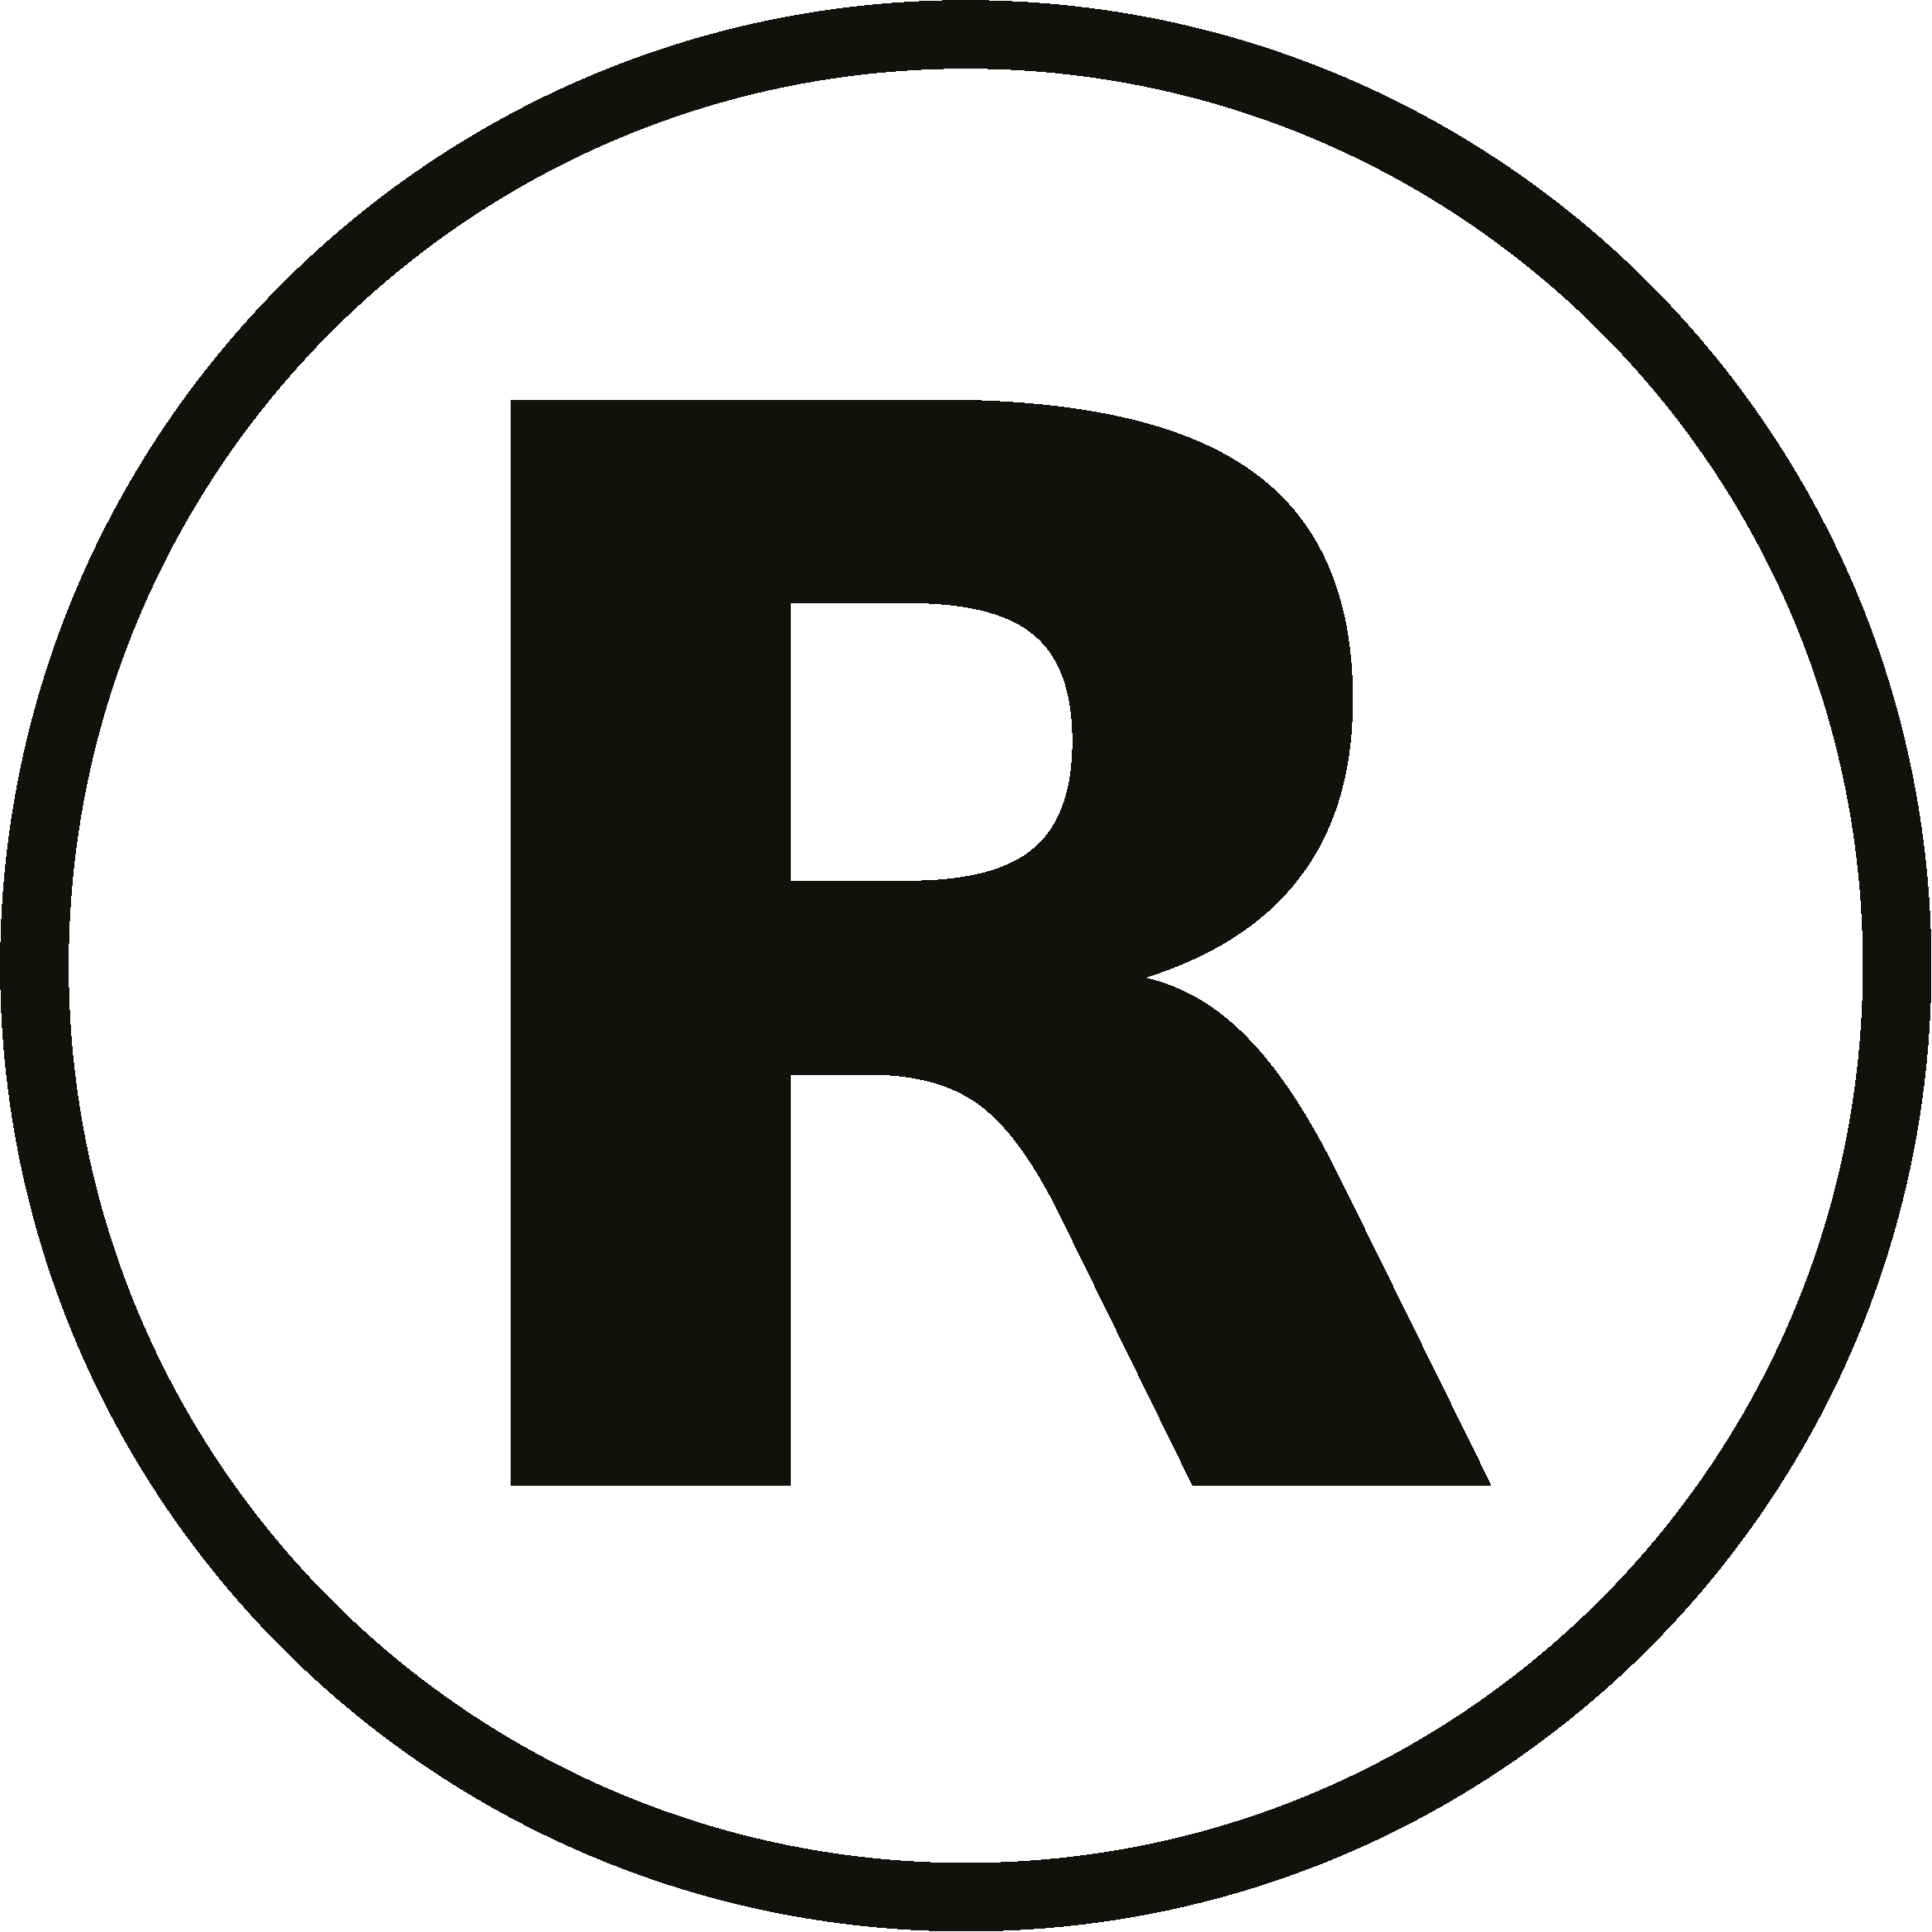 Round r. Логотип r. Буква r. Значок буквы r. Эмблема с буквой r.